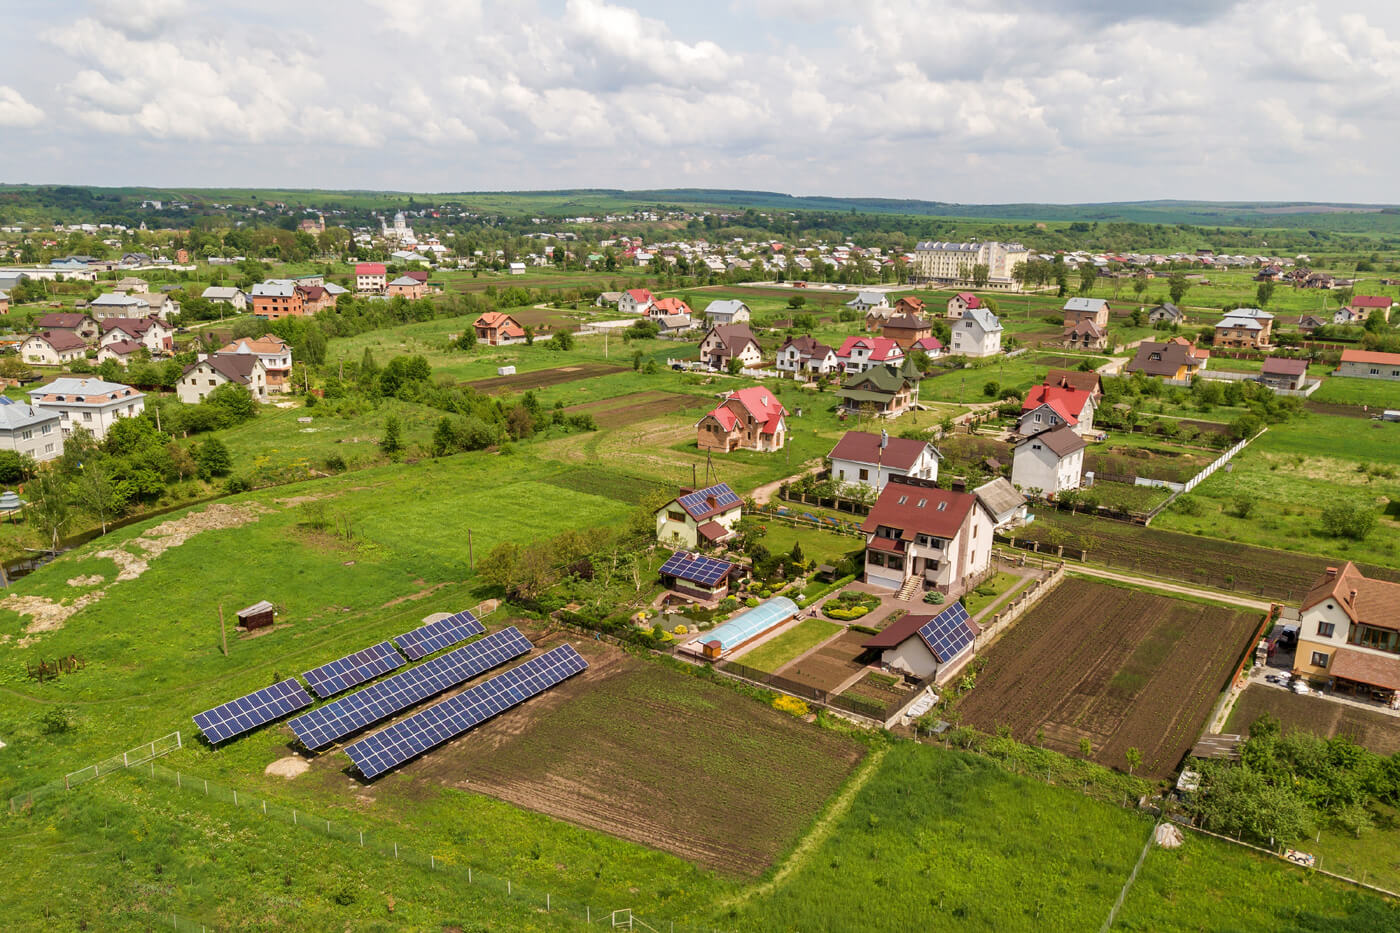 Community solar